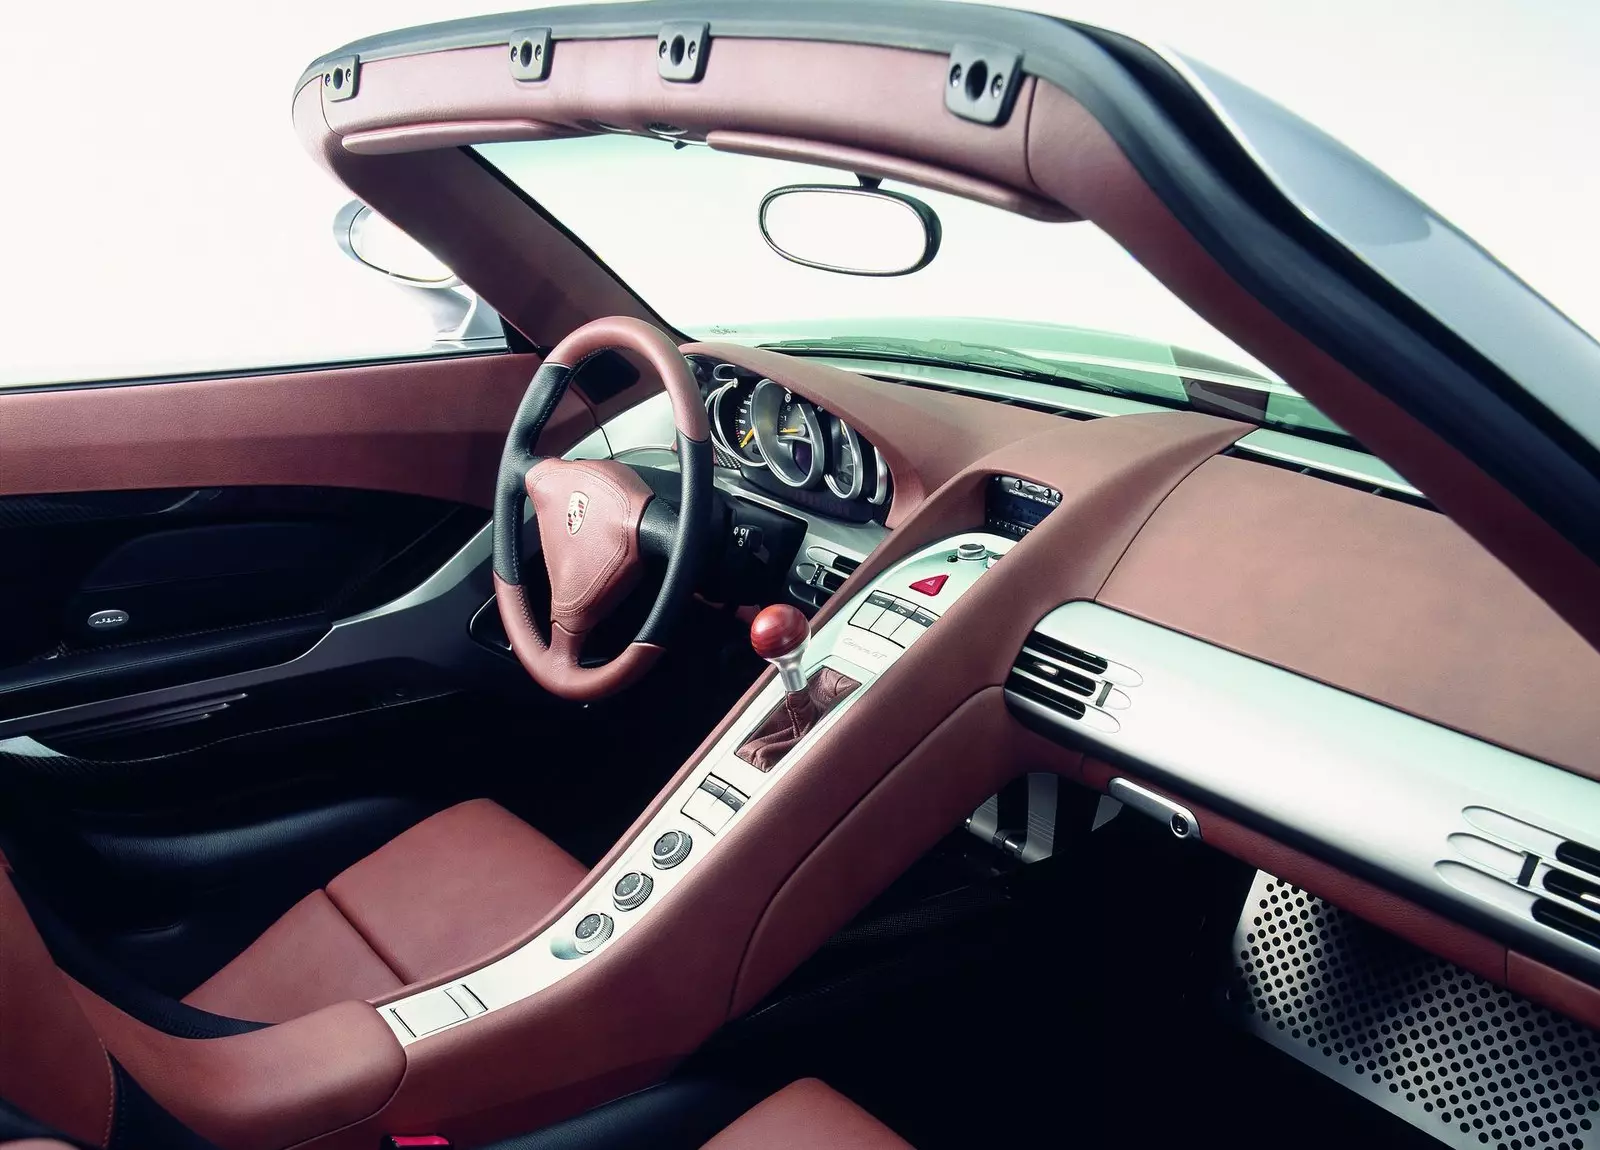 Porsche Carrera GT - interior